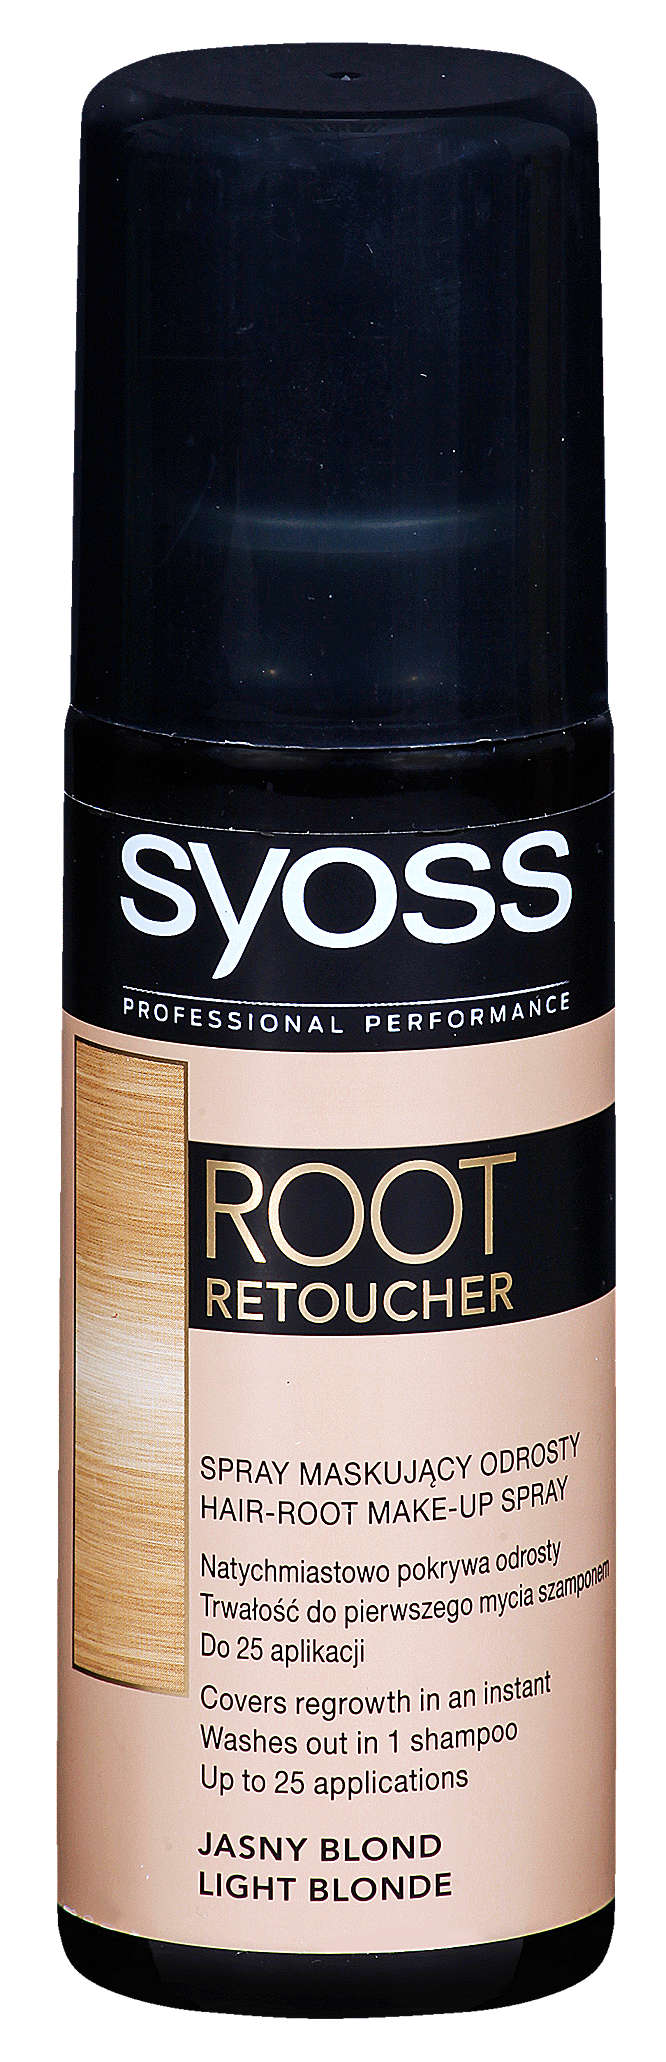 Fotografija ponude Syoss Root retoucher